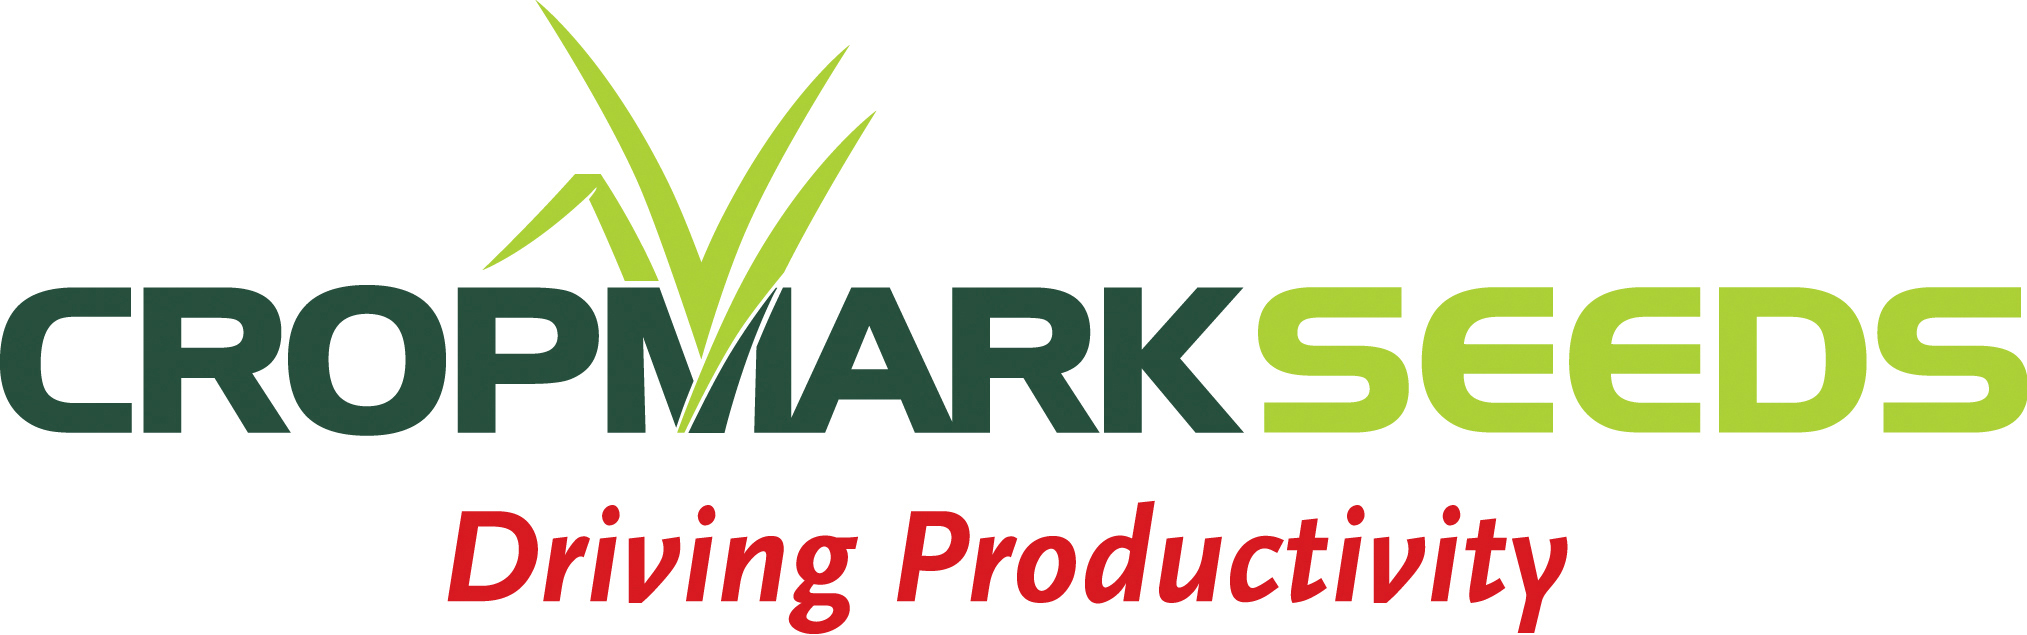 Cropmark Seeds Ltd